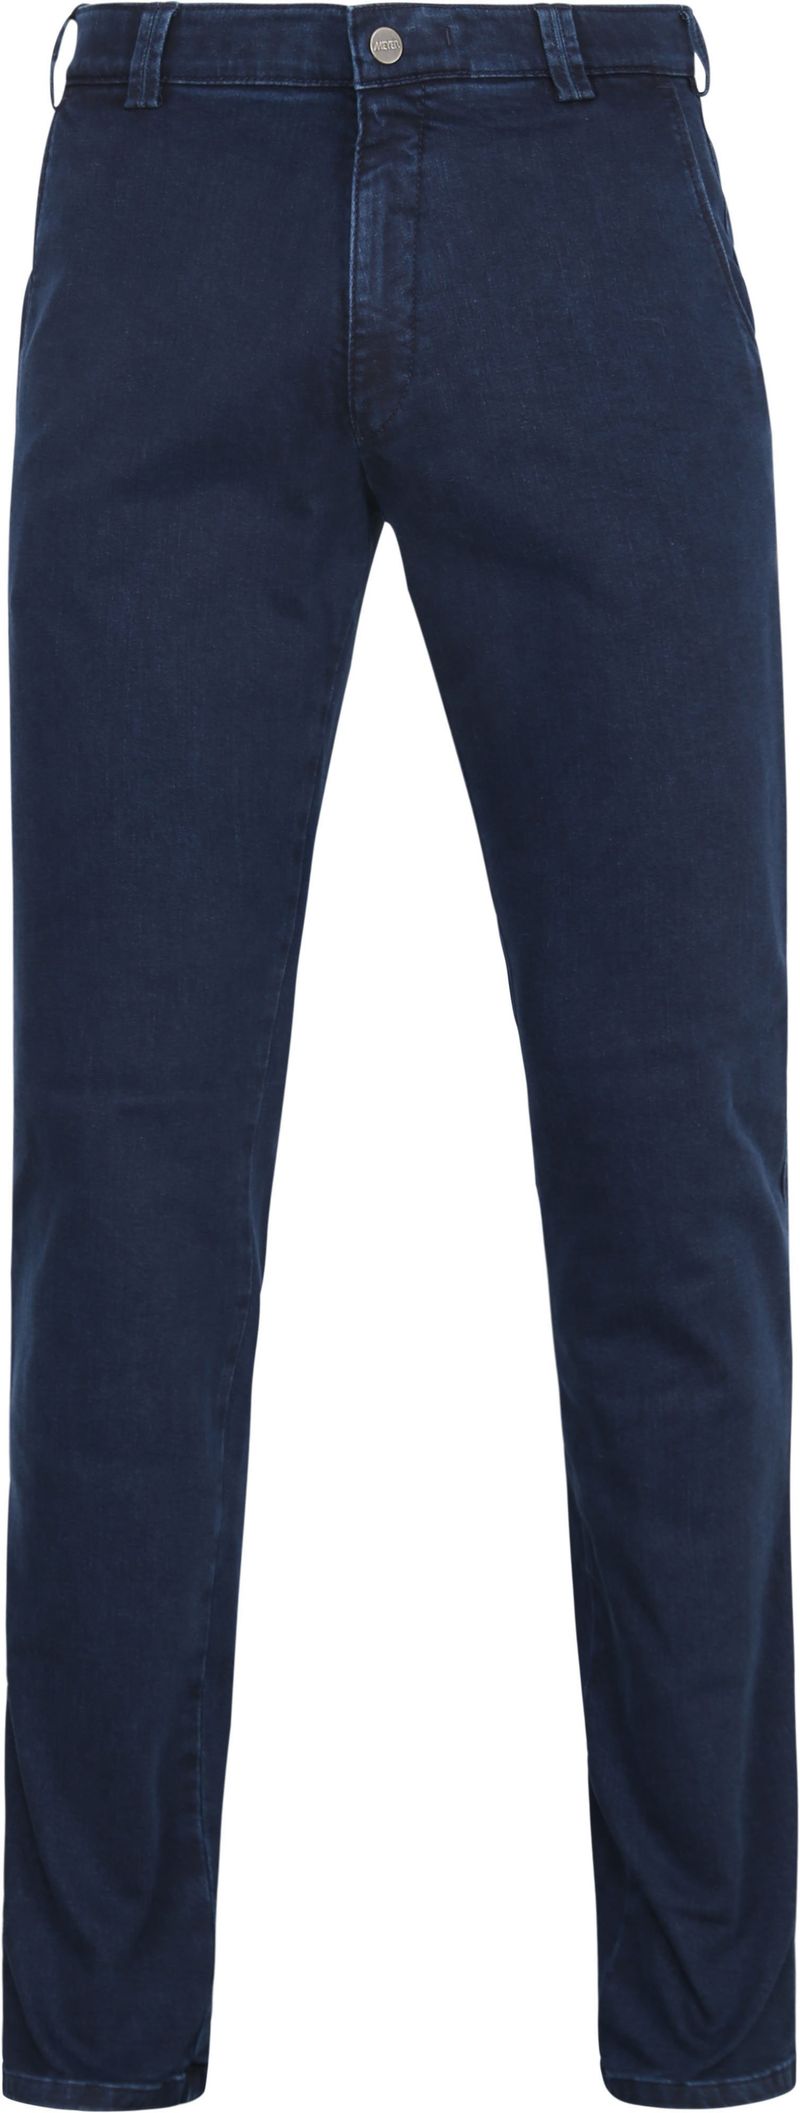 Meyer Chino Bonn Donkerblauw Jeans